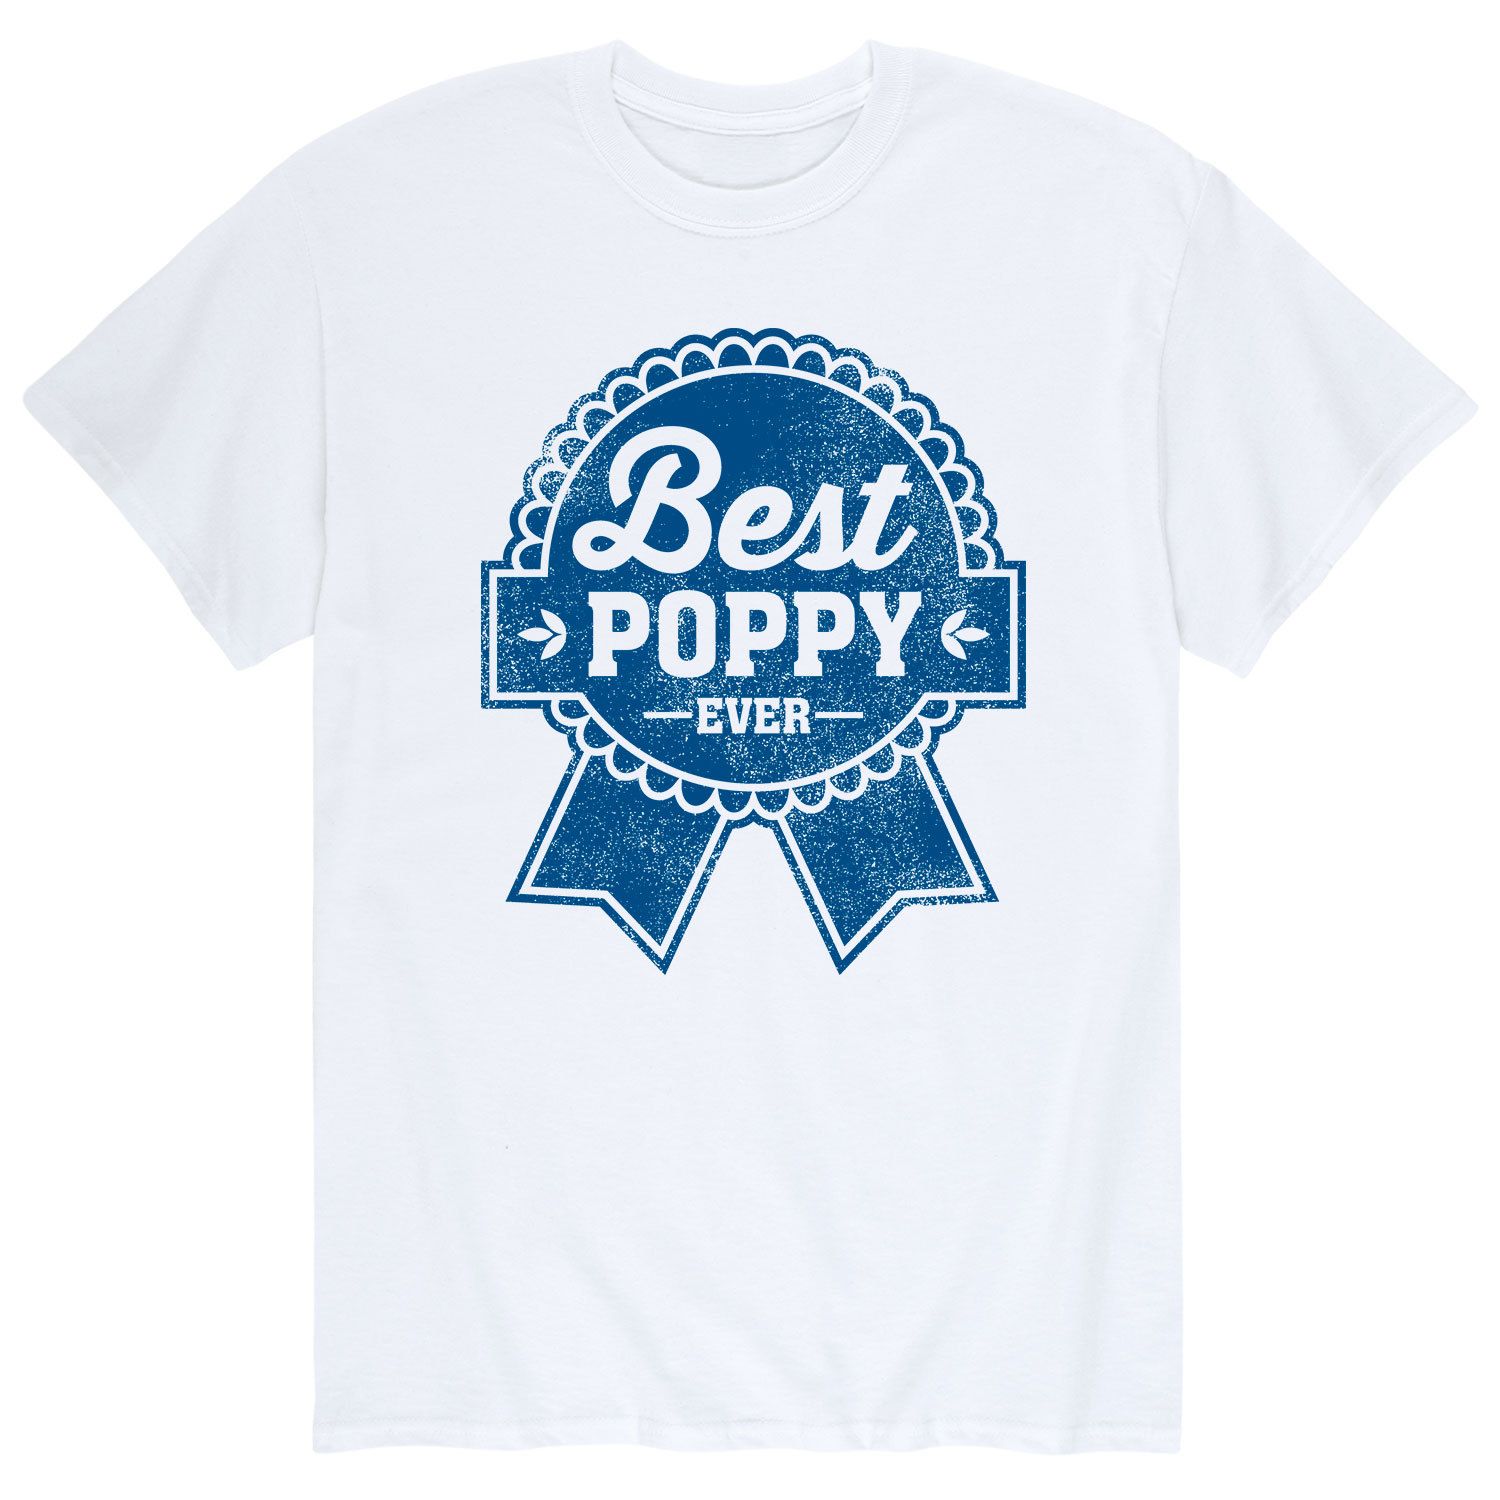 Мужская футболка Best Poppy с пивной этикеткой Licensed Character